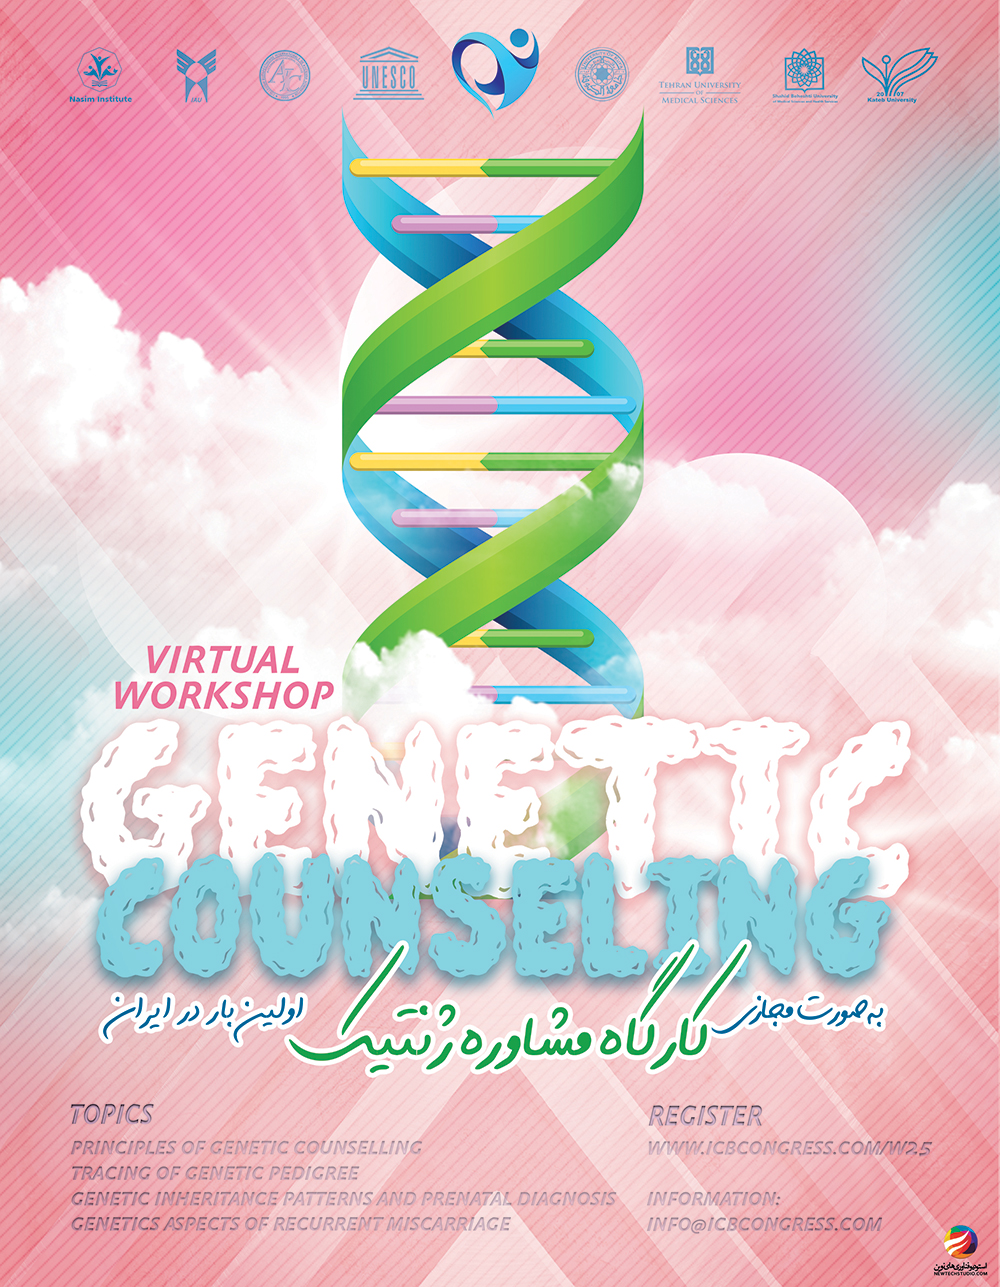 Genetic Counseling Workshops